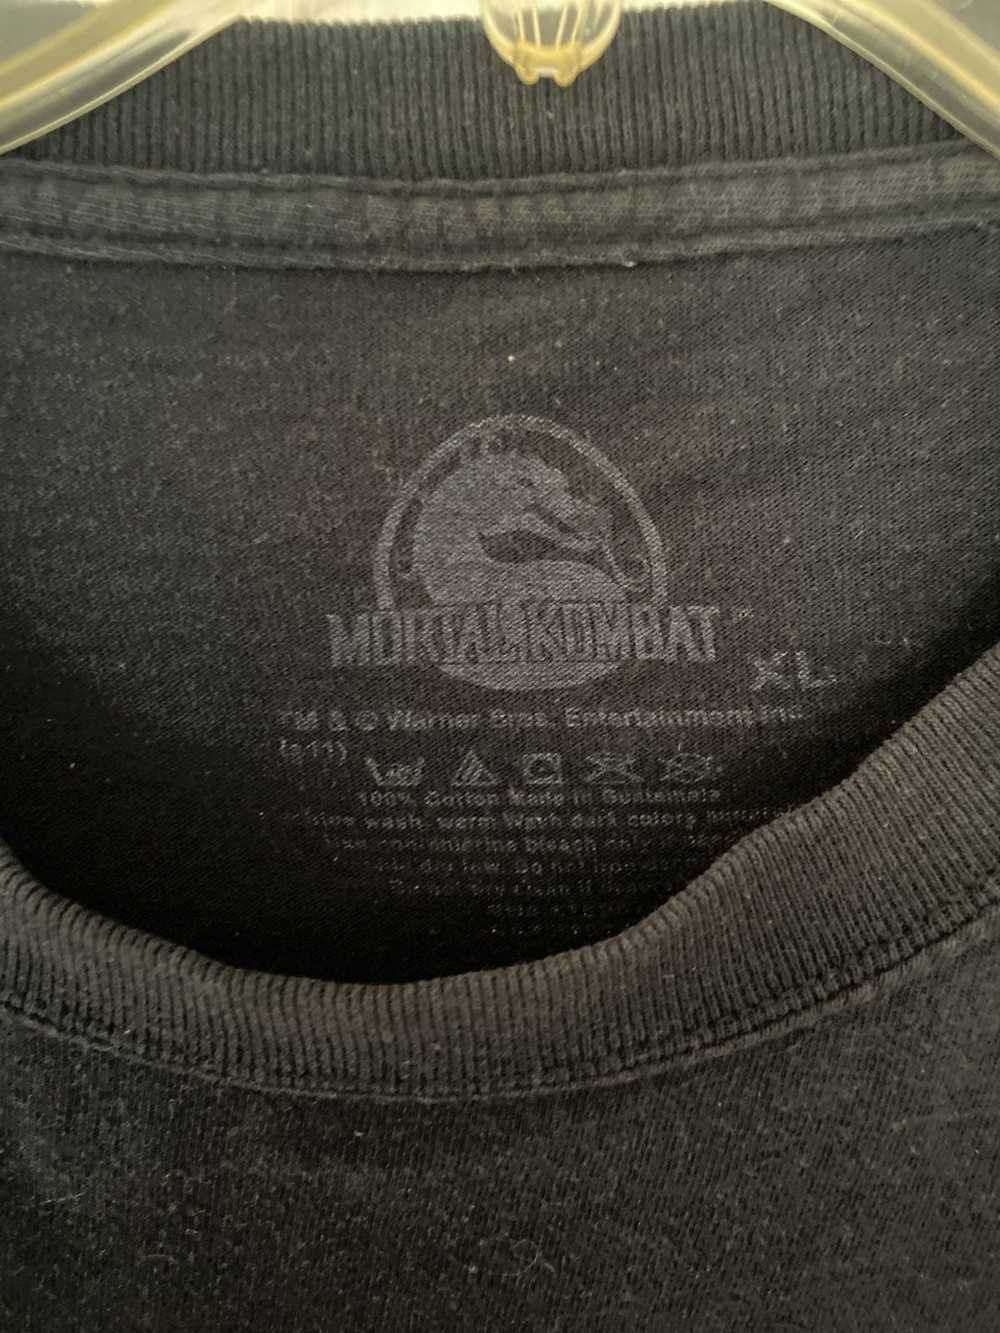 Vintage Mortal kombat classic logo - image 2